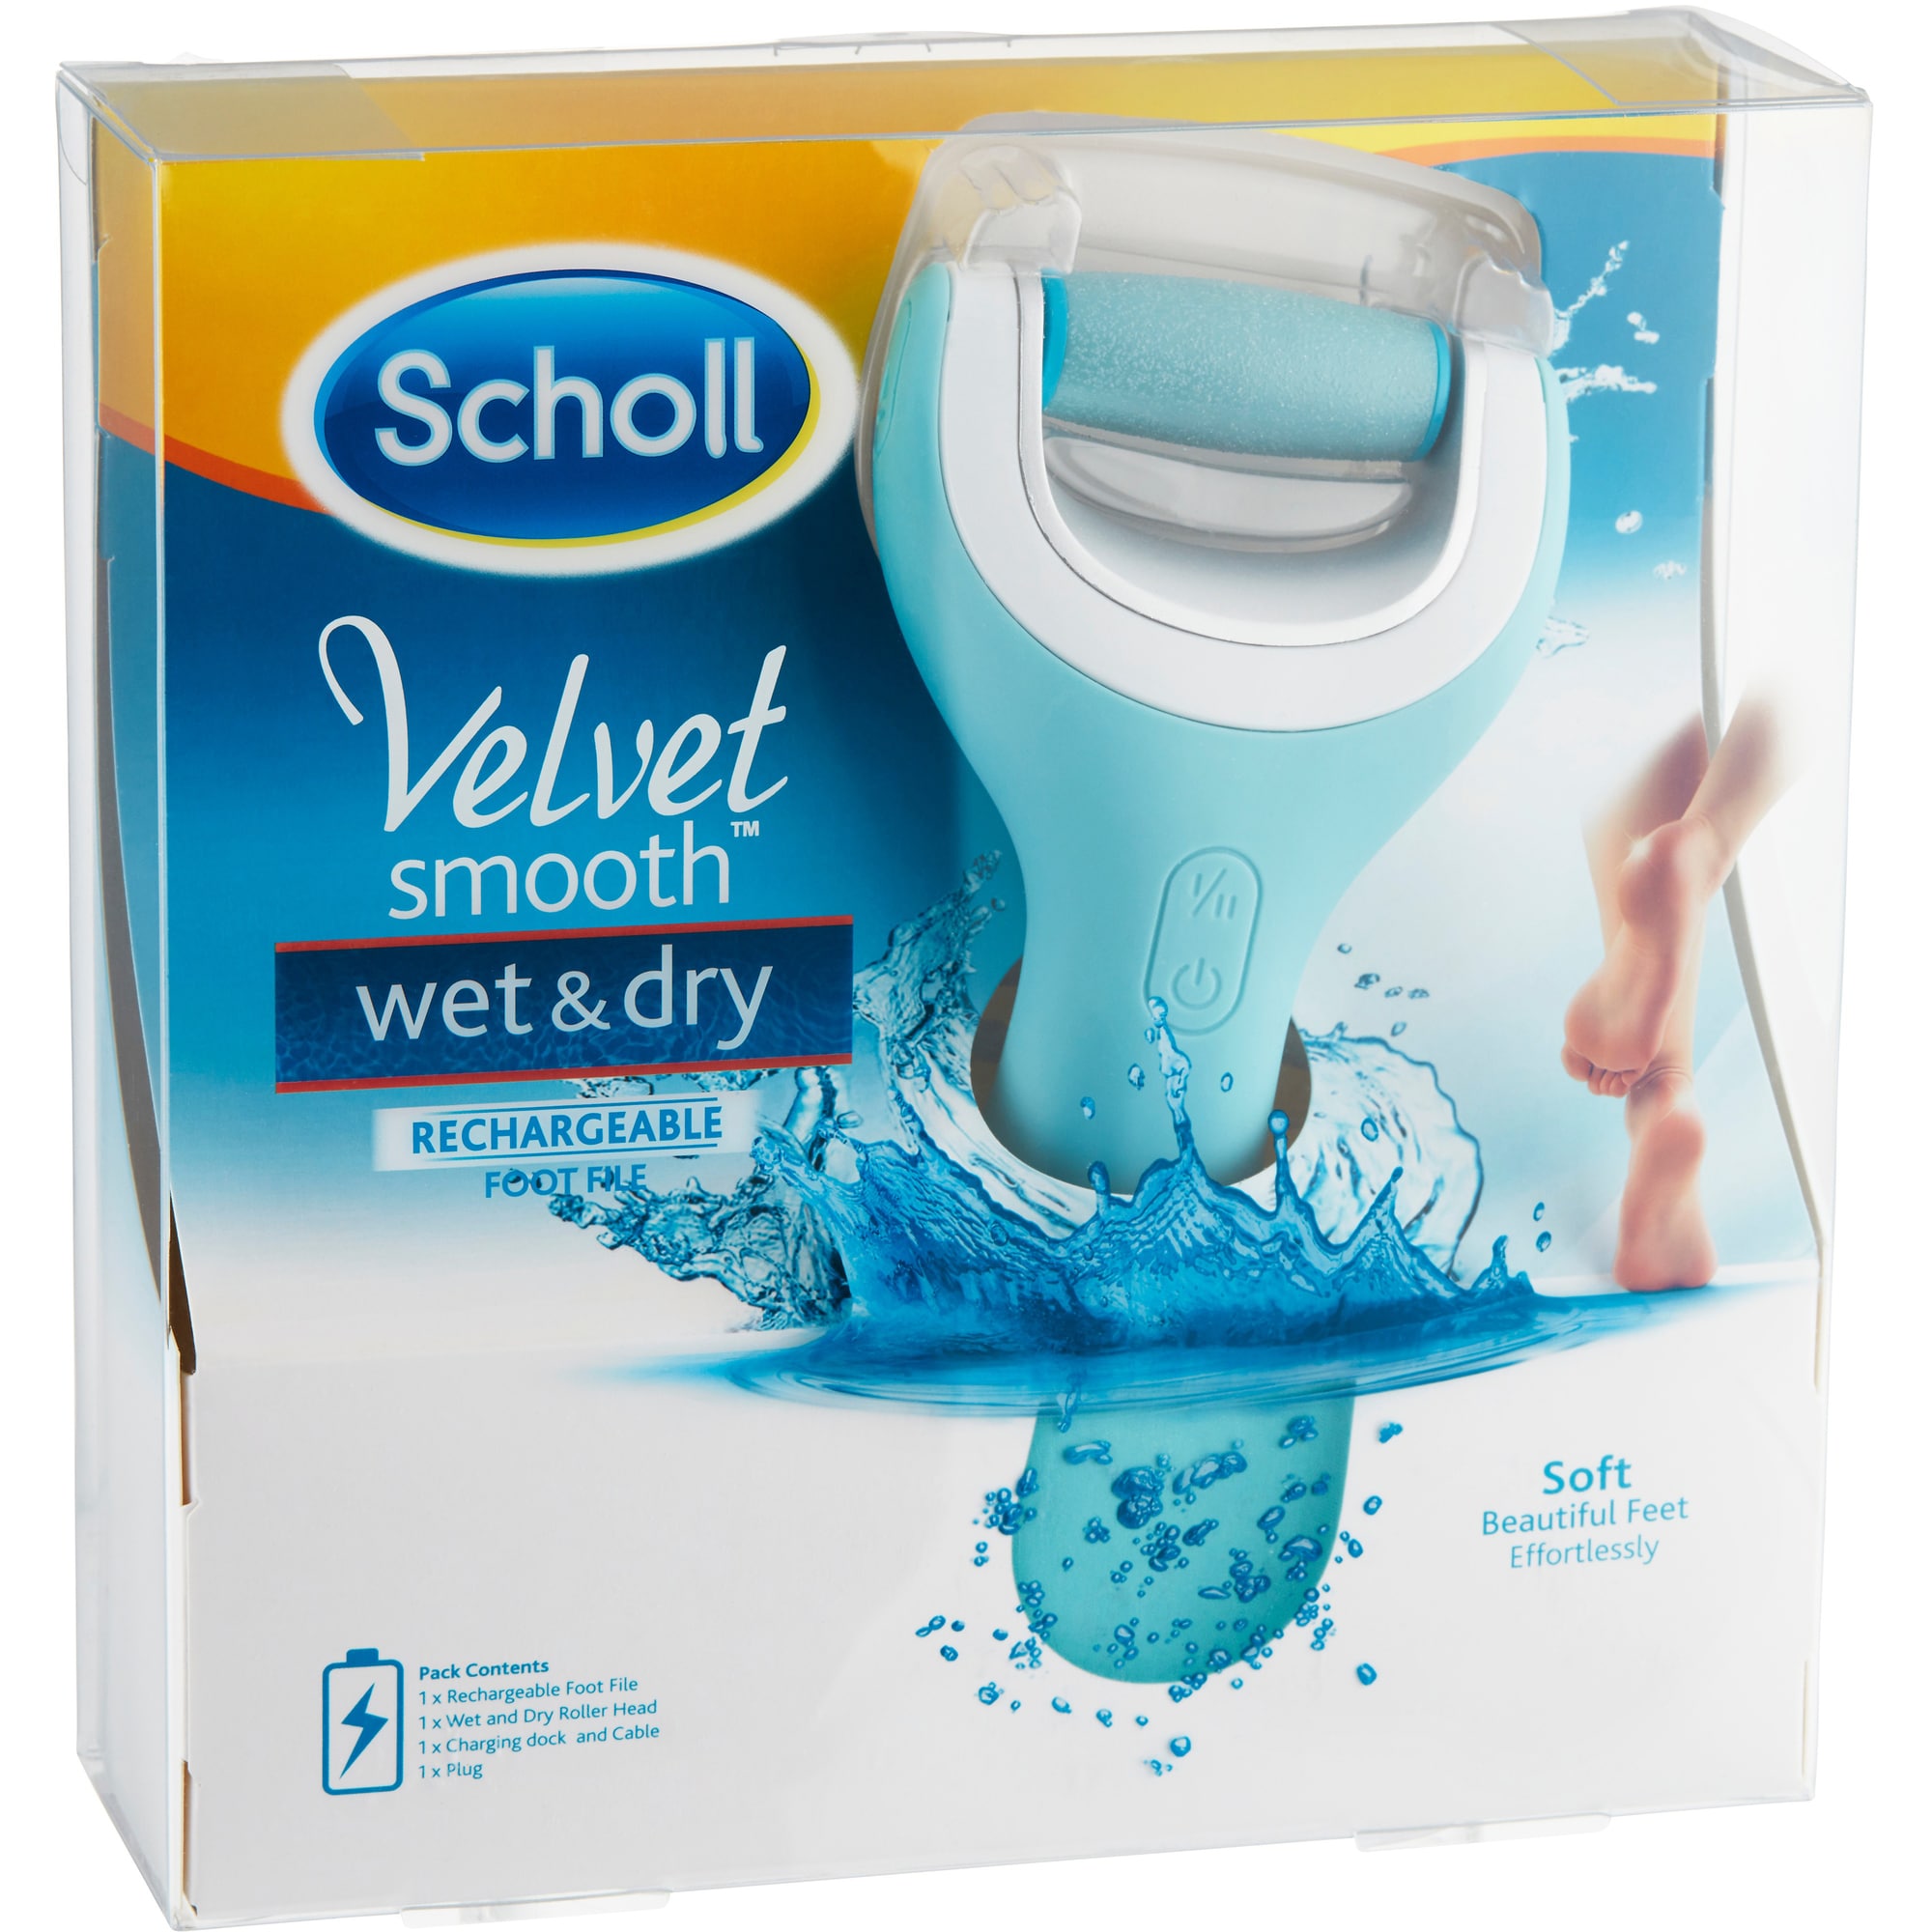 Scholl Velvet Smooth Pedi fotfil SCHOLL3021678 - Elkjøp